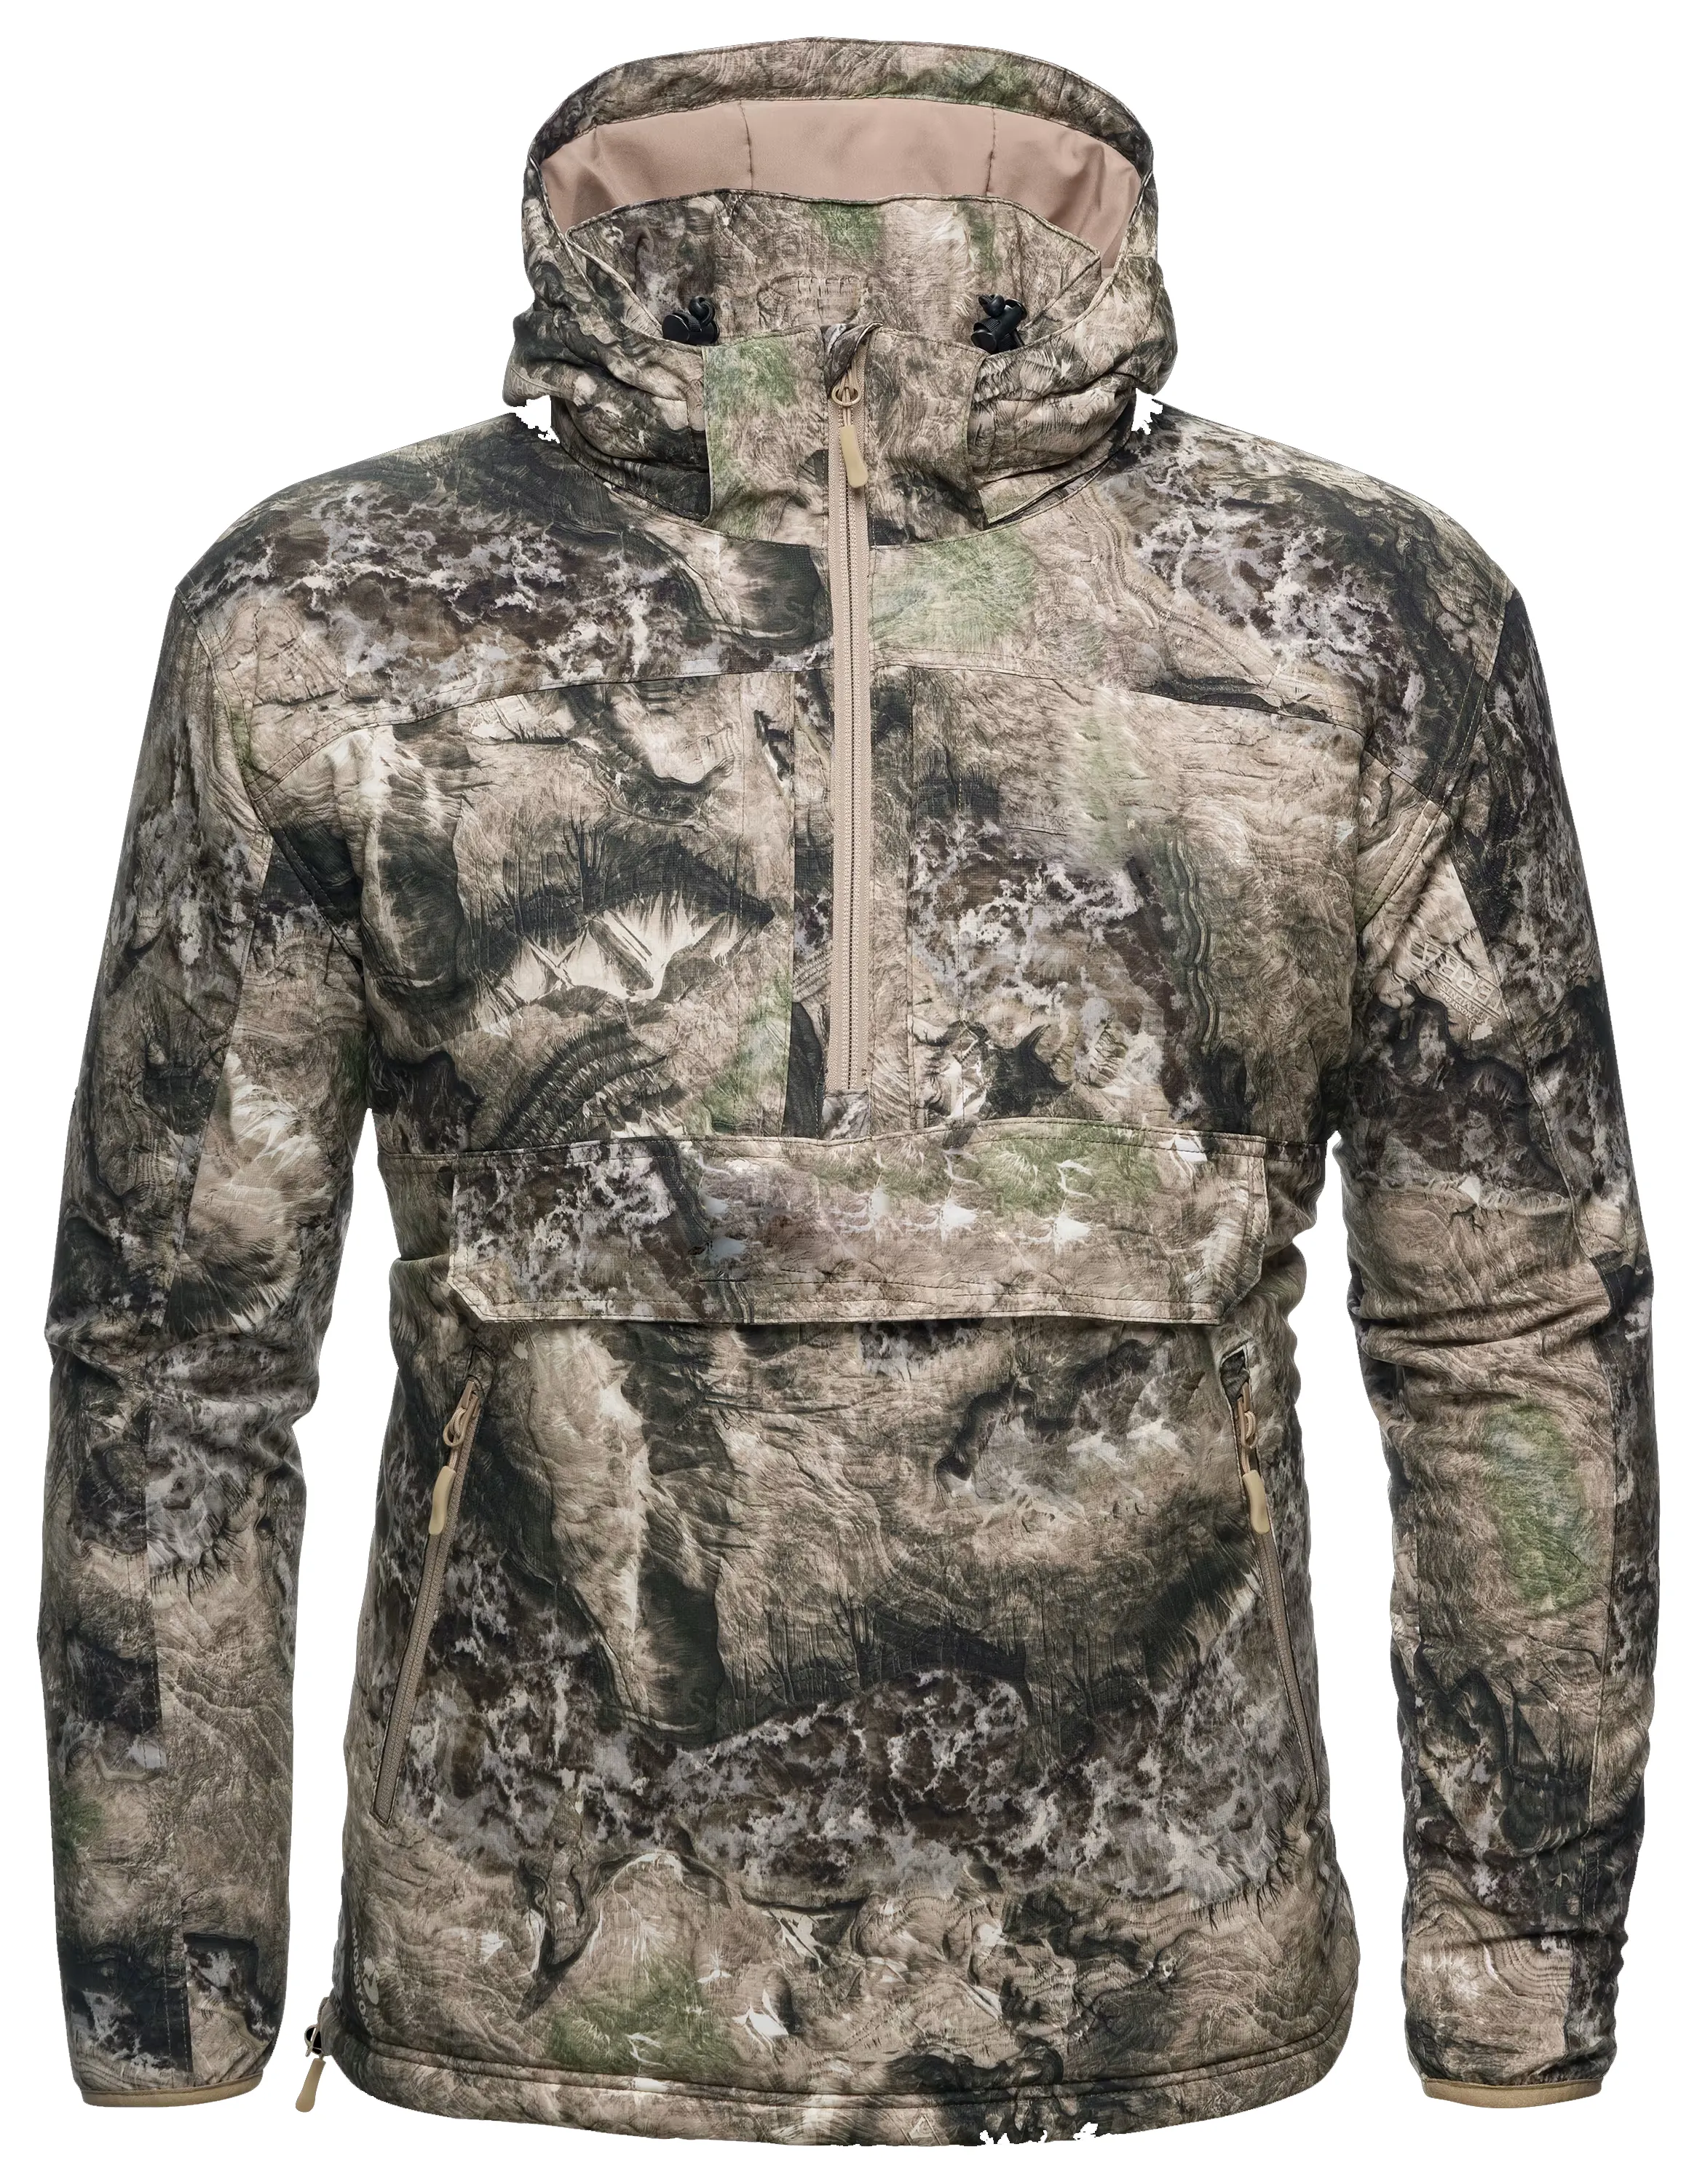 Chaqueta Predator al aire libre para hombres caza invierno hombres usan ropa tranquila chaqueta impermeable con capucha